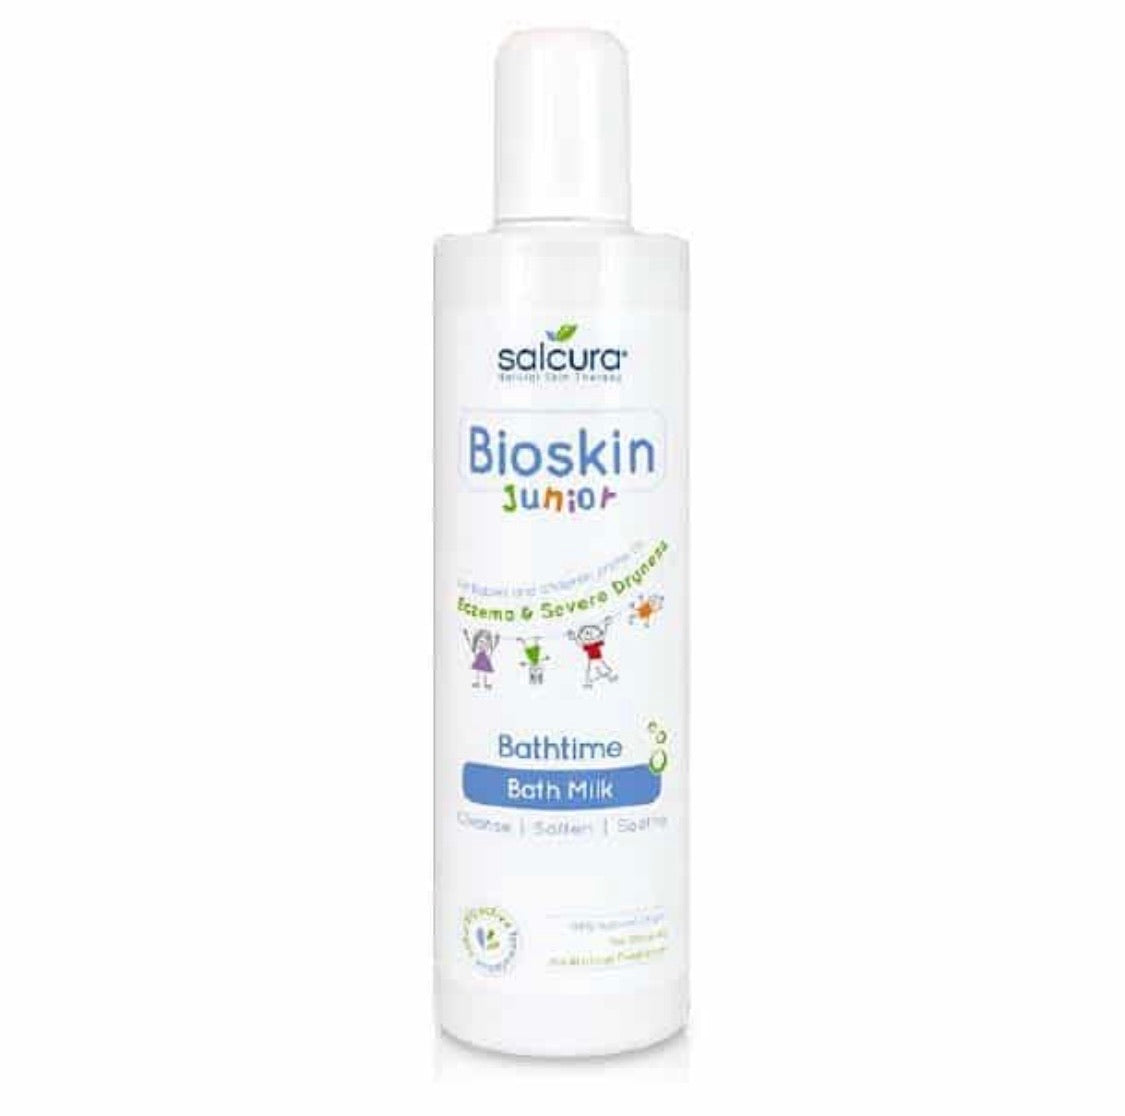 Bioskin Junior Bath Milk 200ml